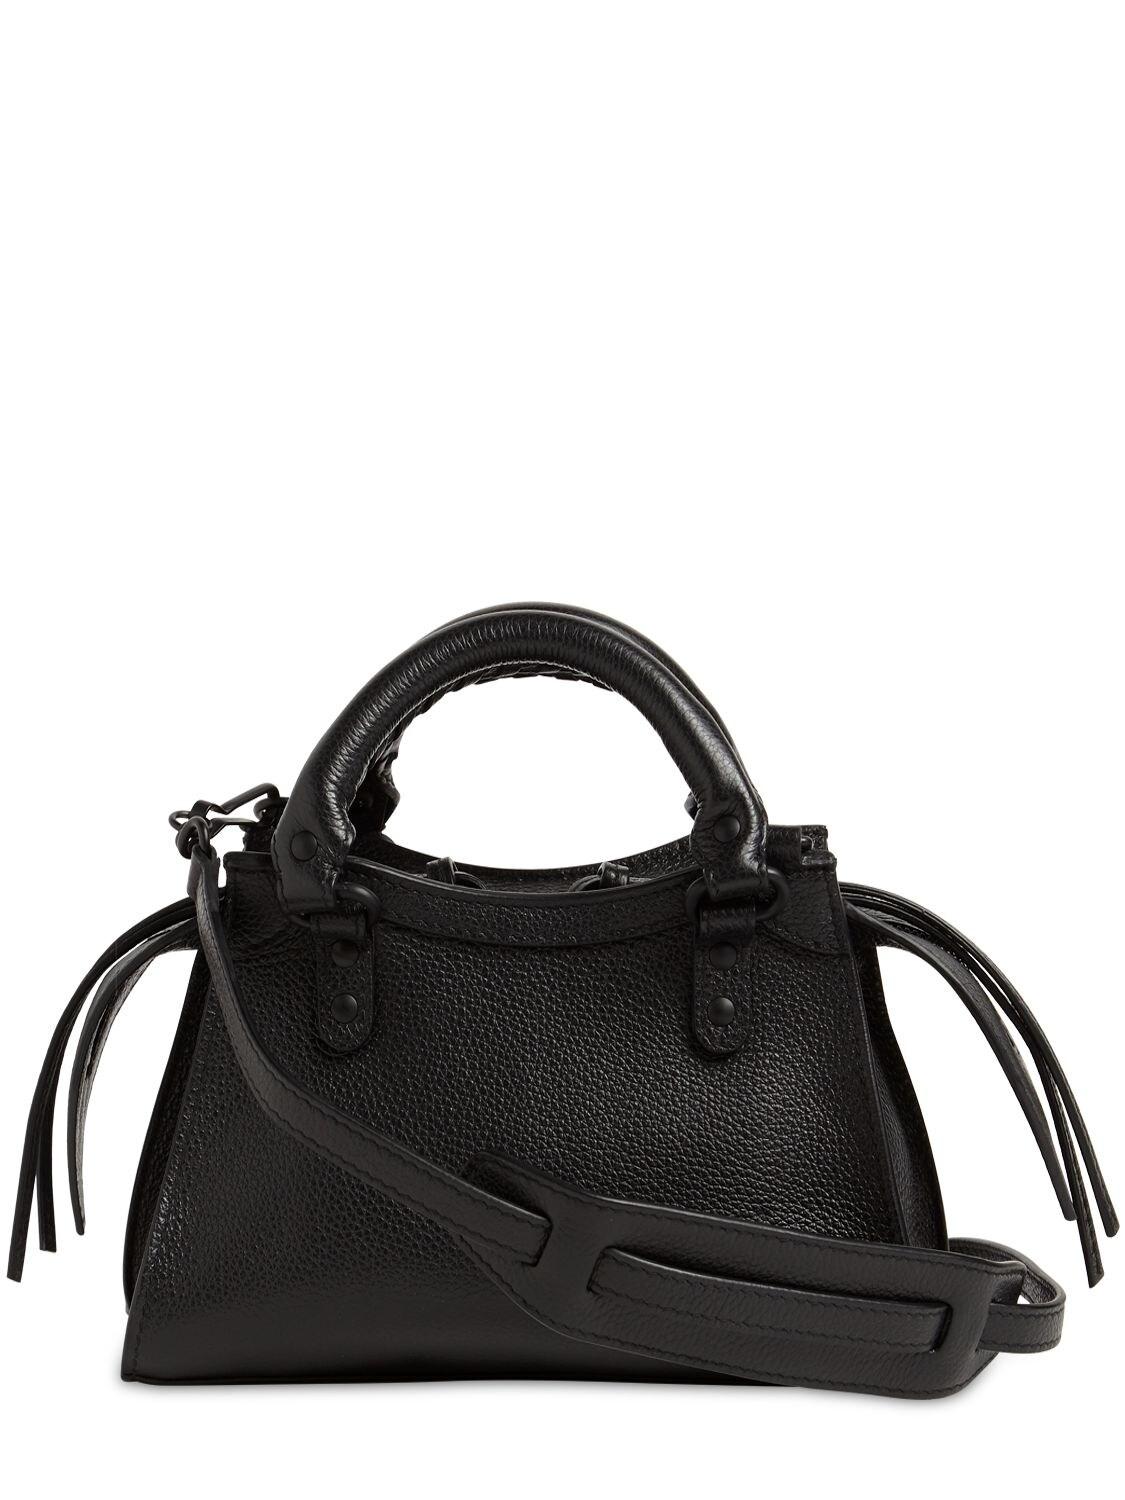 Balenciaga City Neo Mini Leather Bag in Black | Lyst